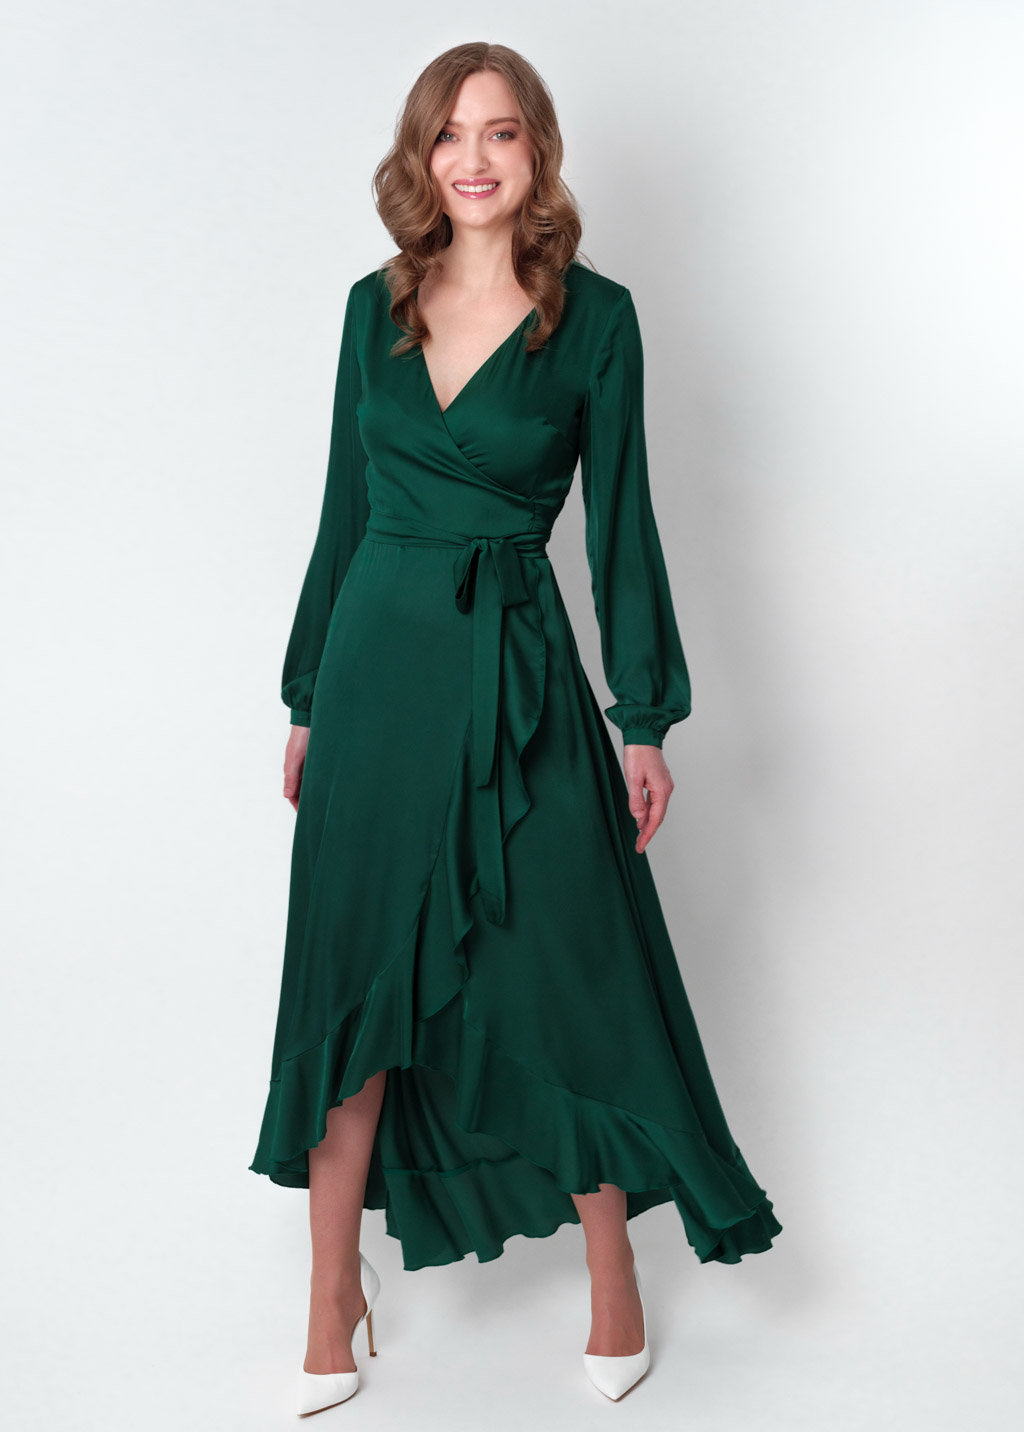 Emerald green wrap dress